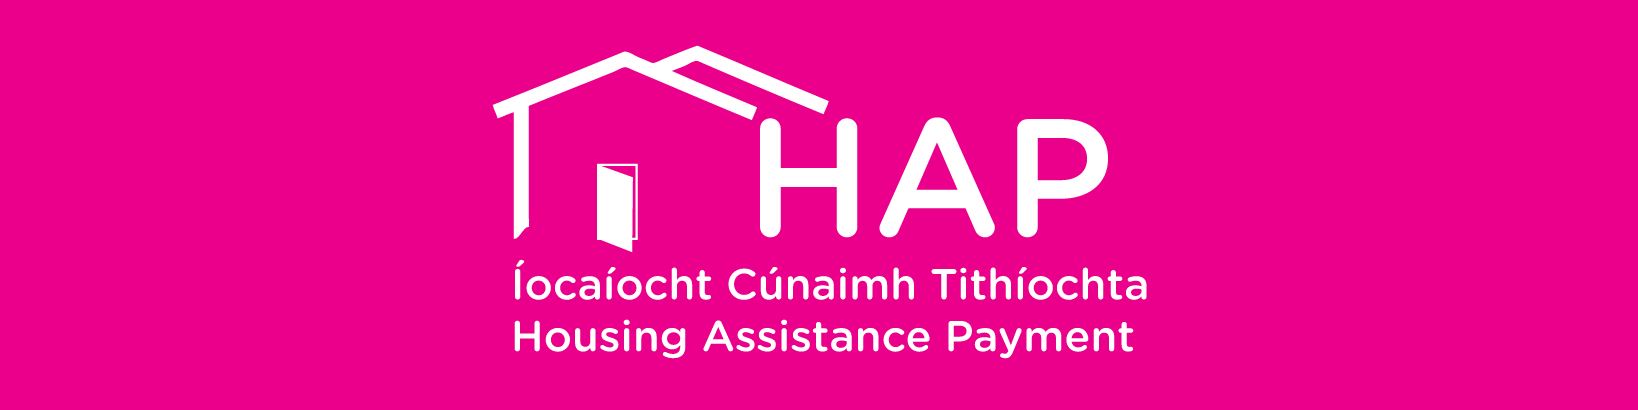 HAP Housing Assistance Payment Ireland